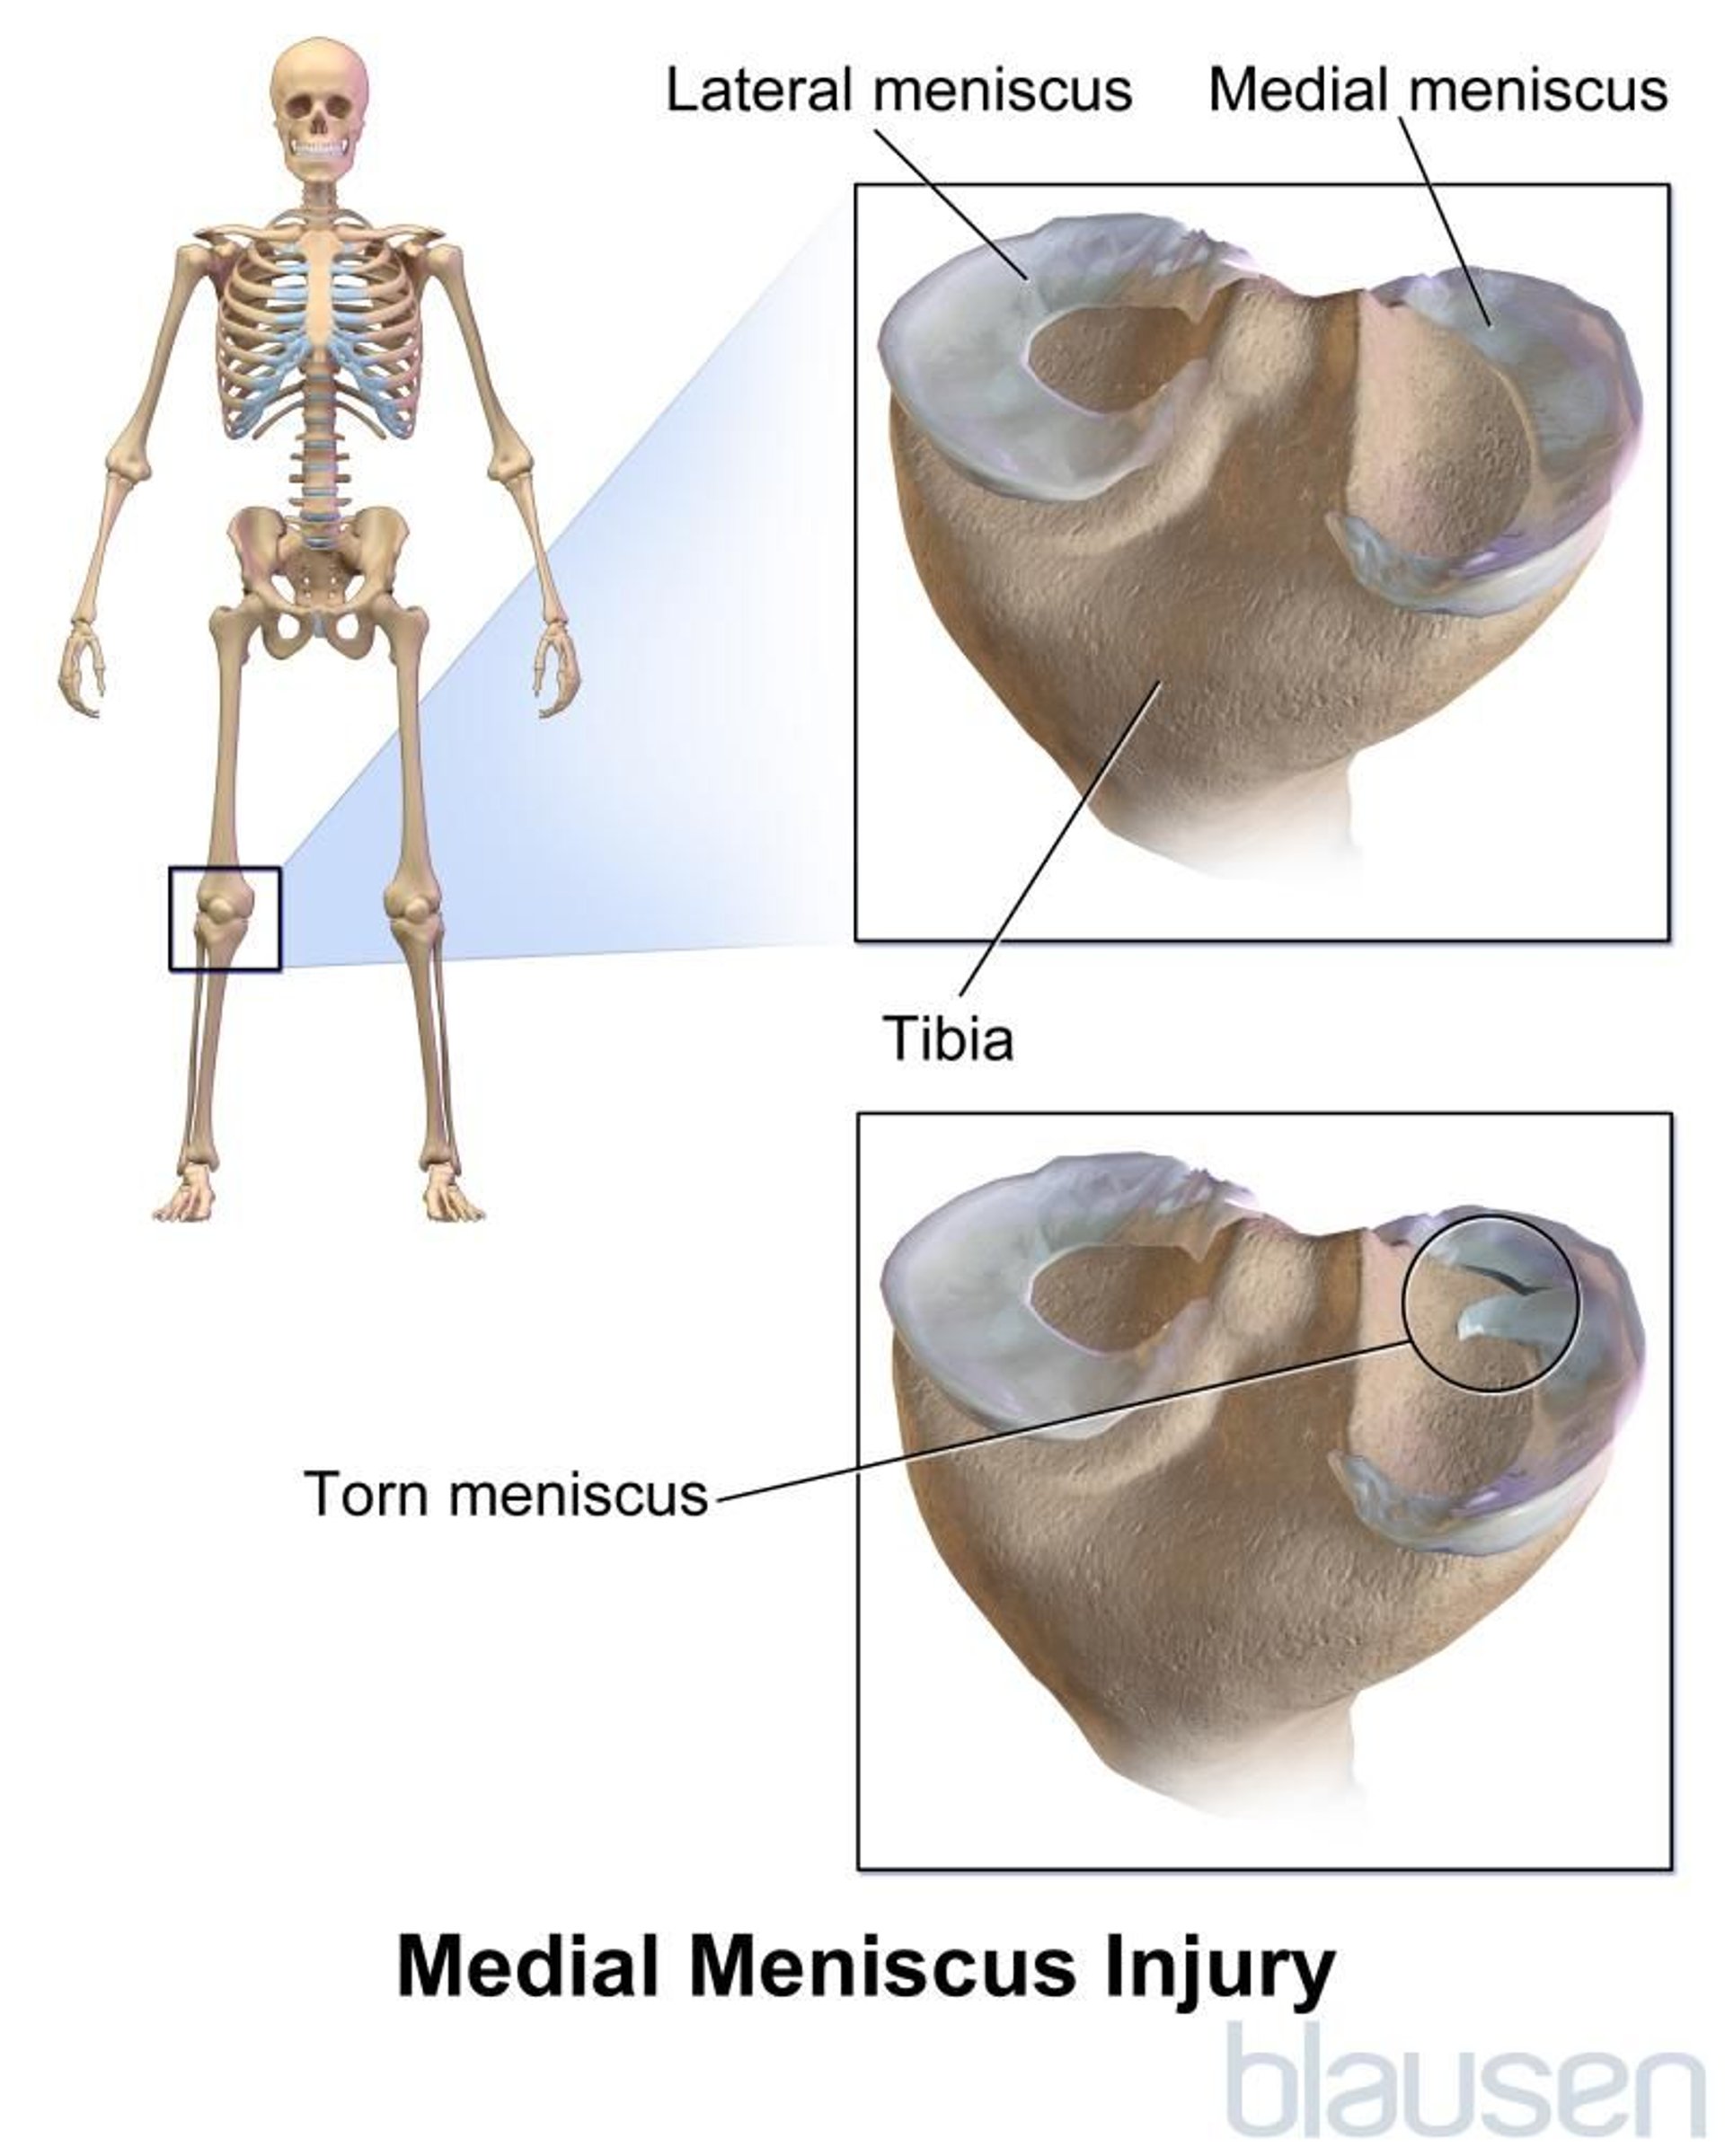 Medial Meniscus Injury